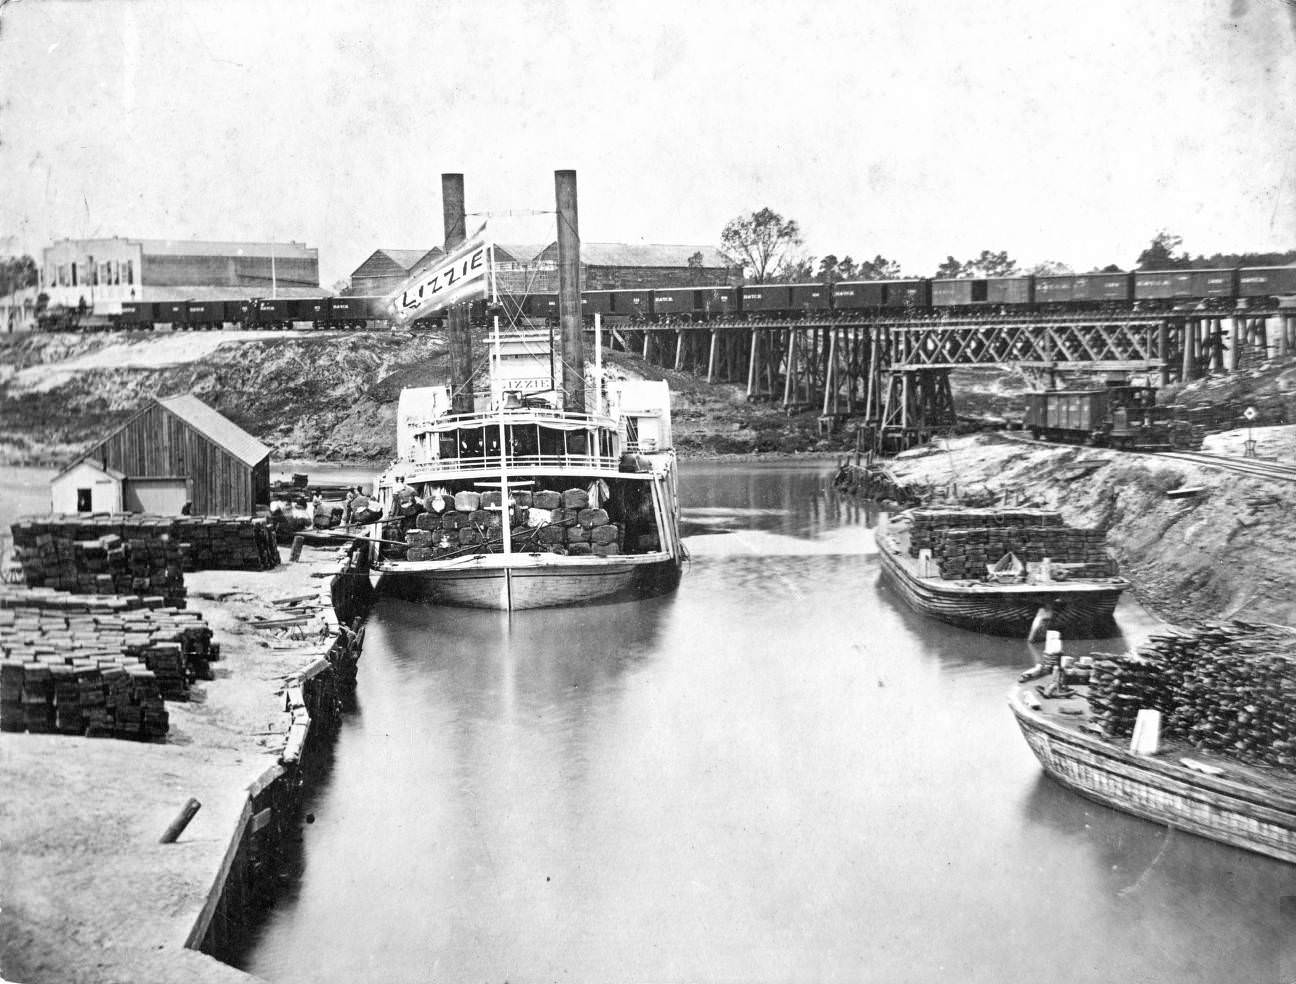 Boats in Buffalo Bayou, Houston, 1910s.